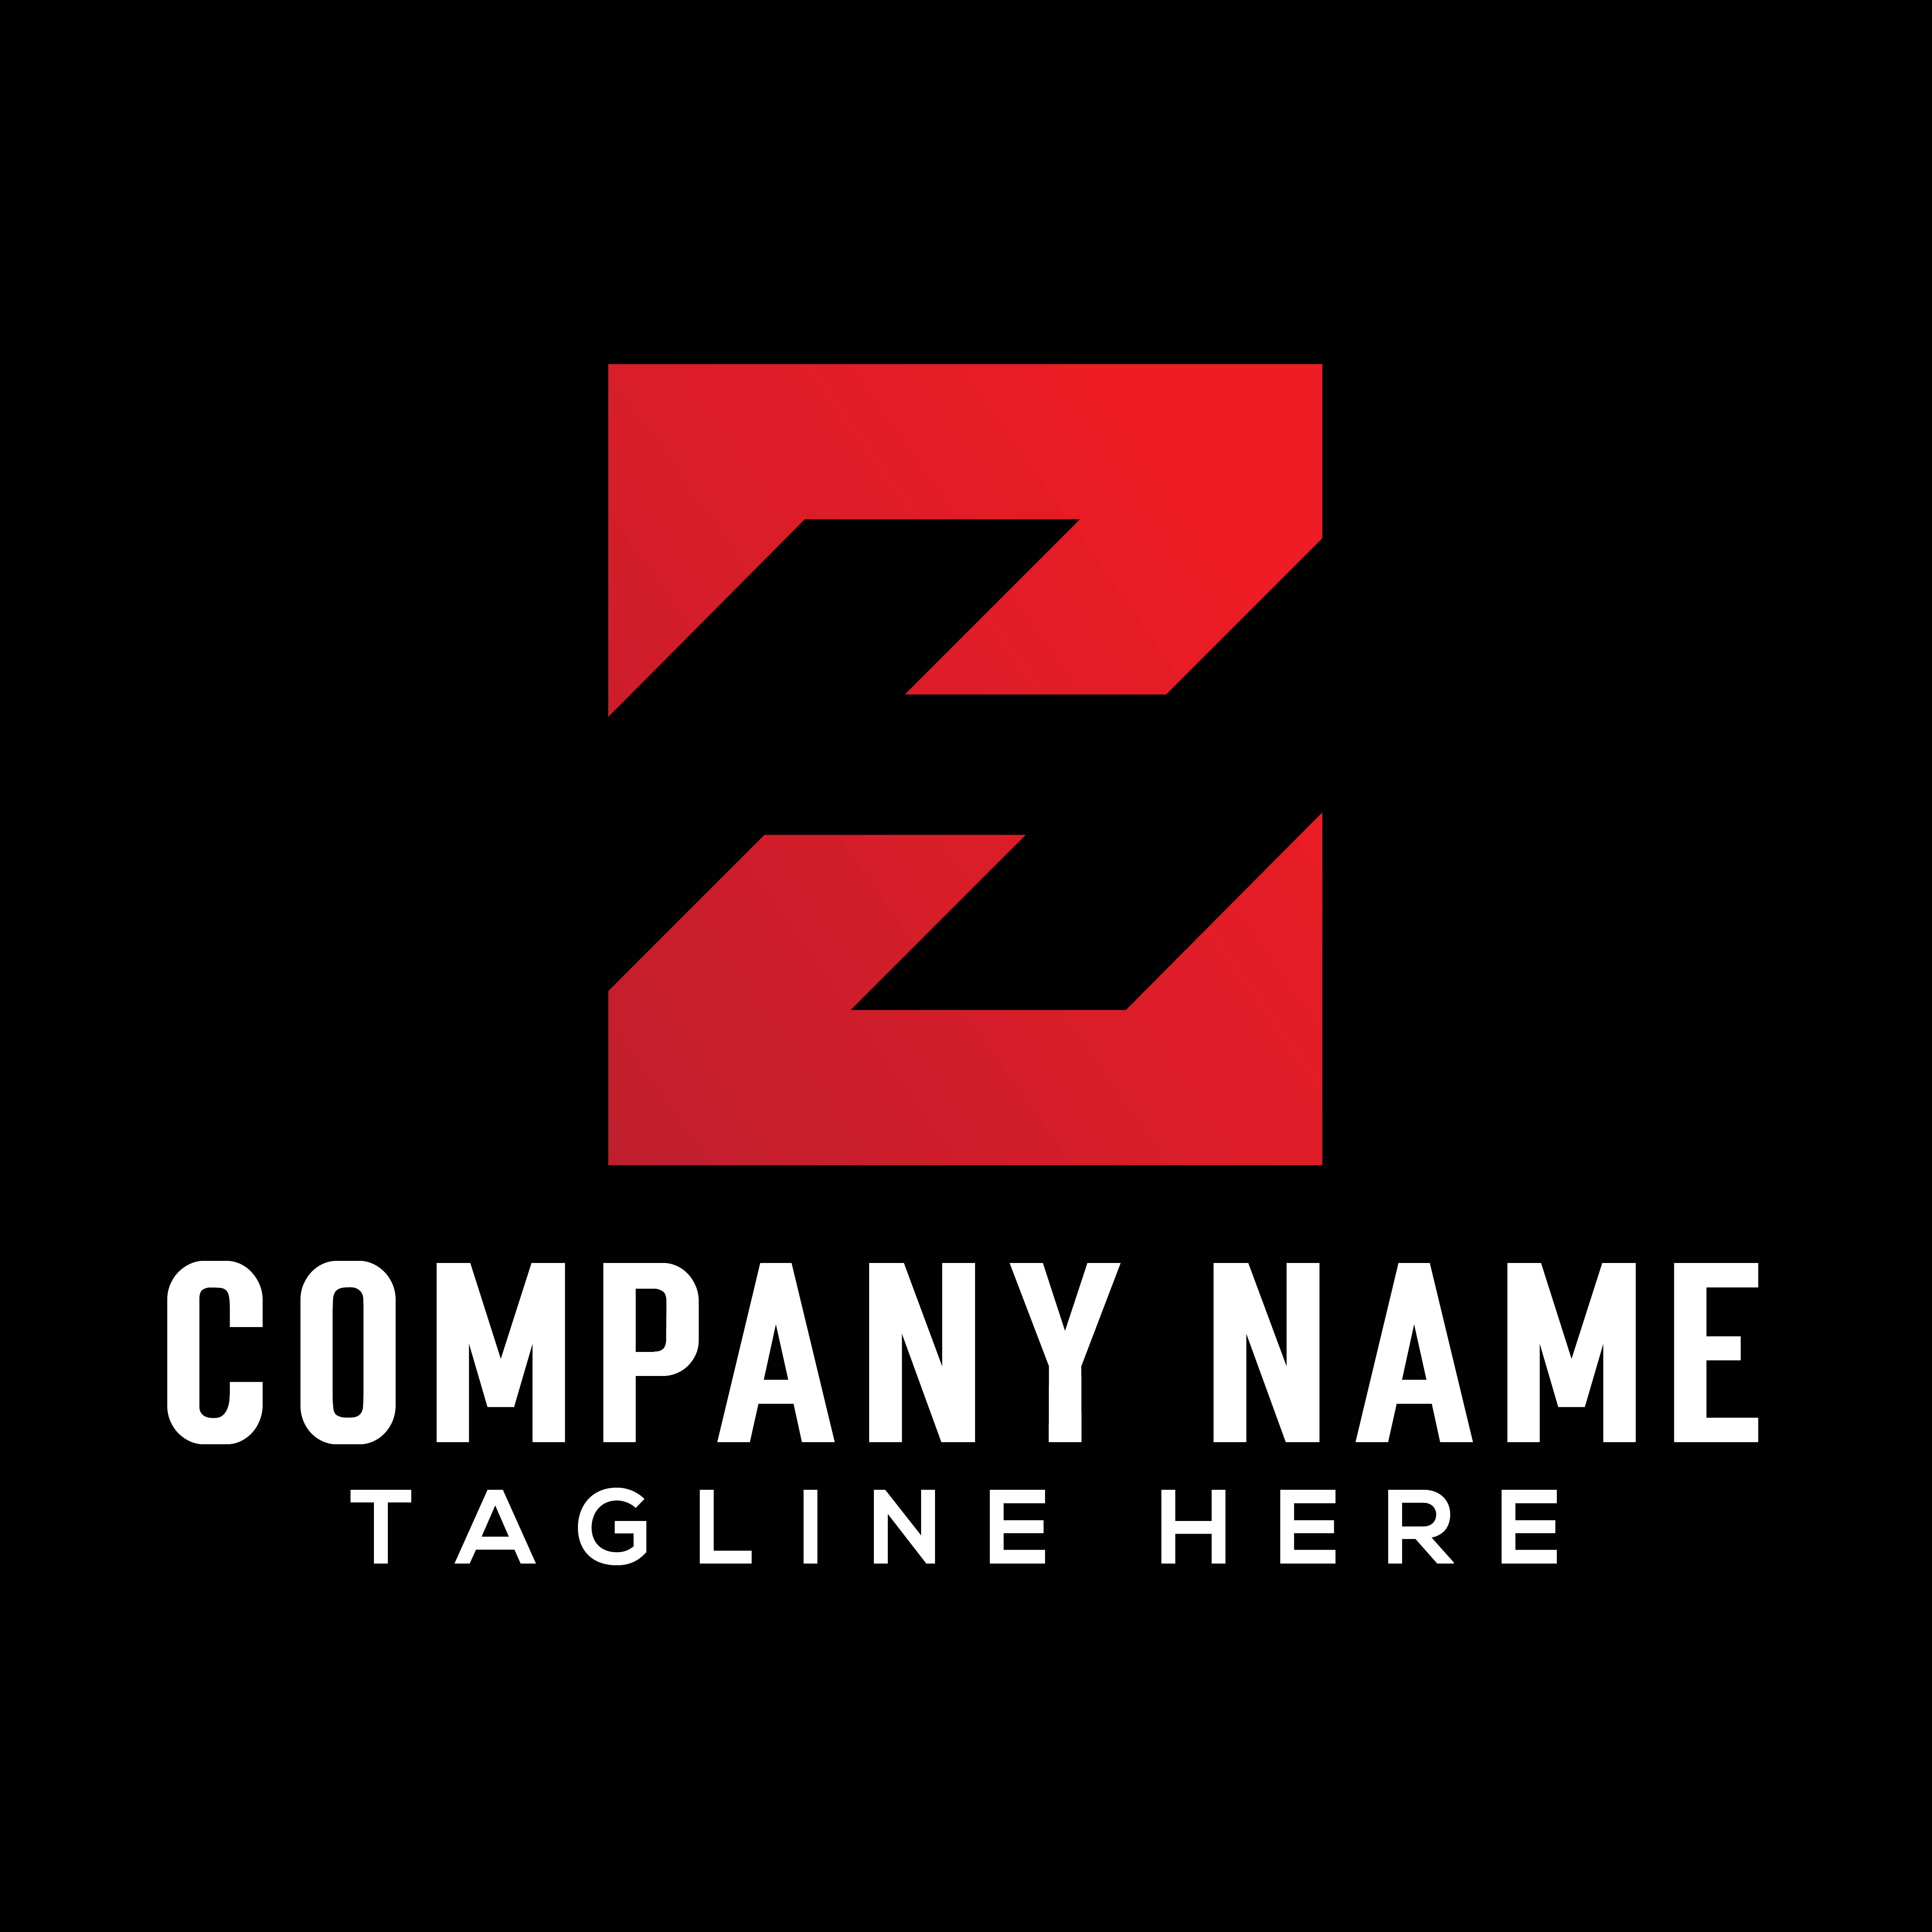 ZH Logo Design cover image.